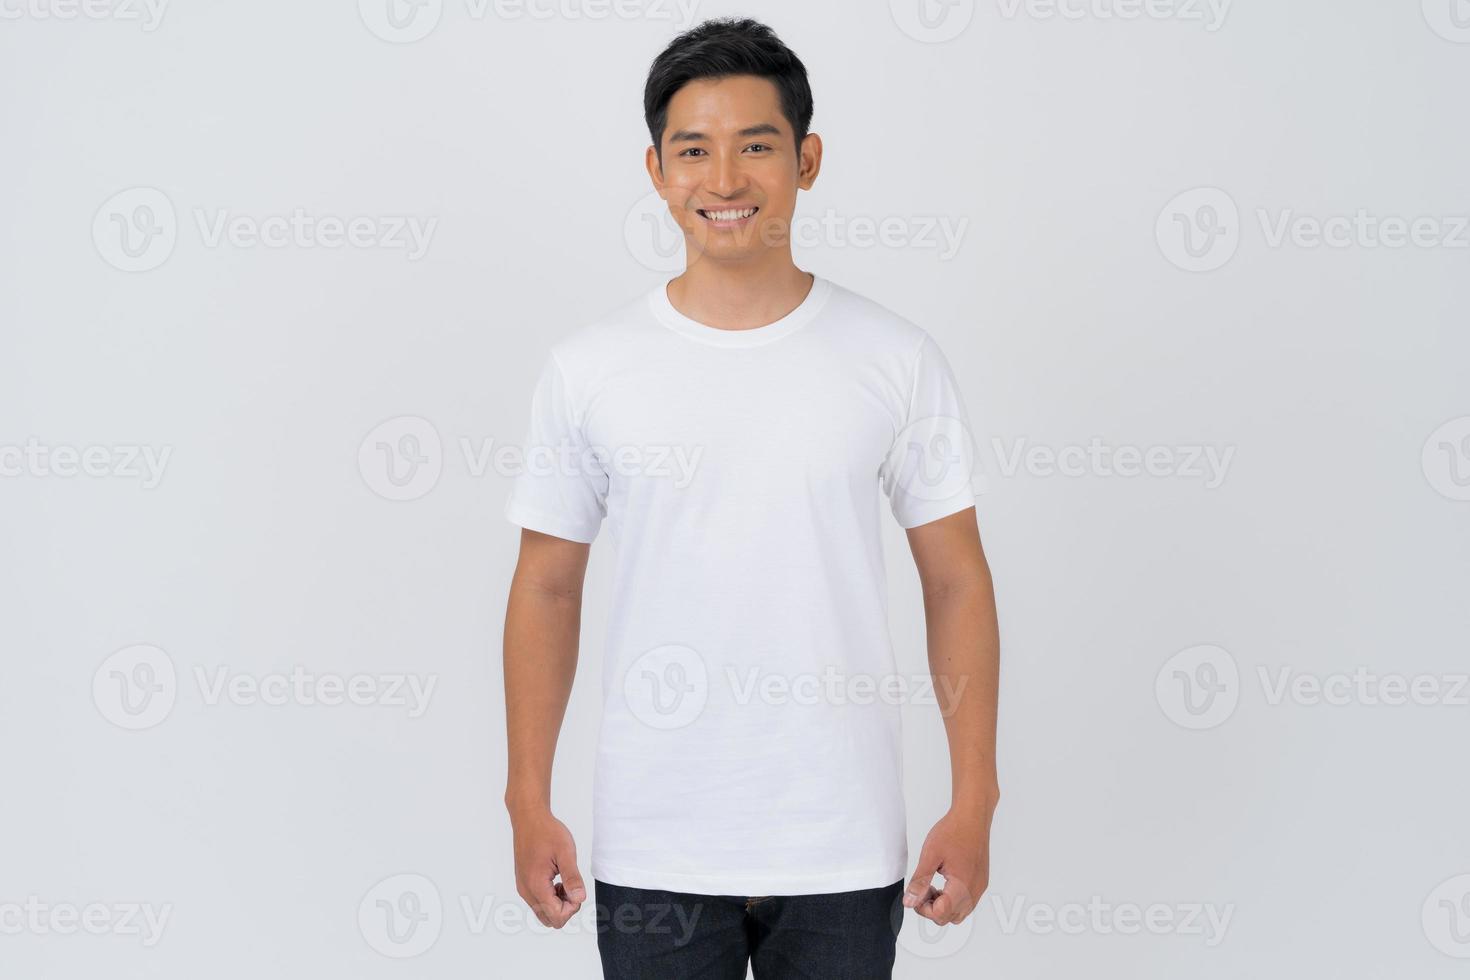 t-shirtontwerp, jonge man in wit t-shirt op witte achtergrond foto